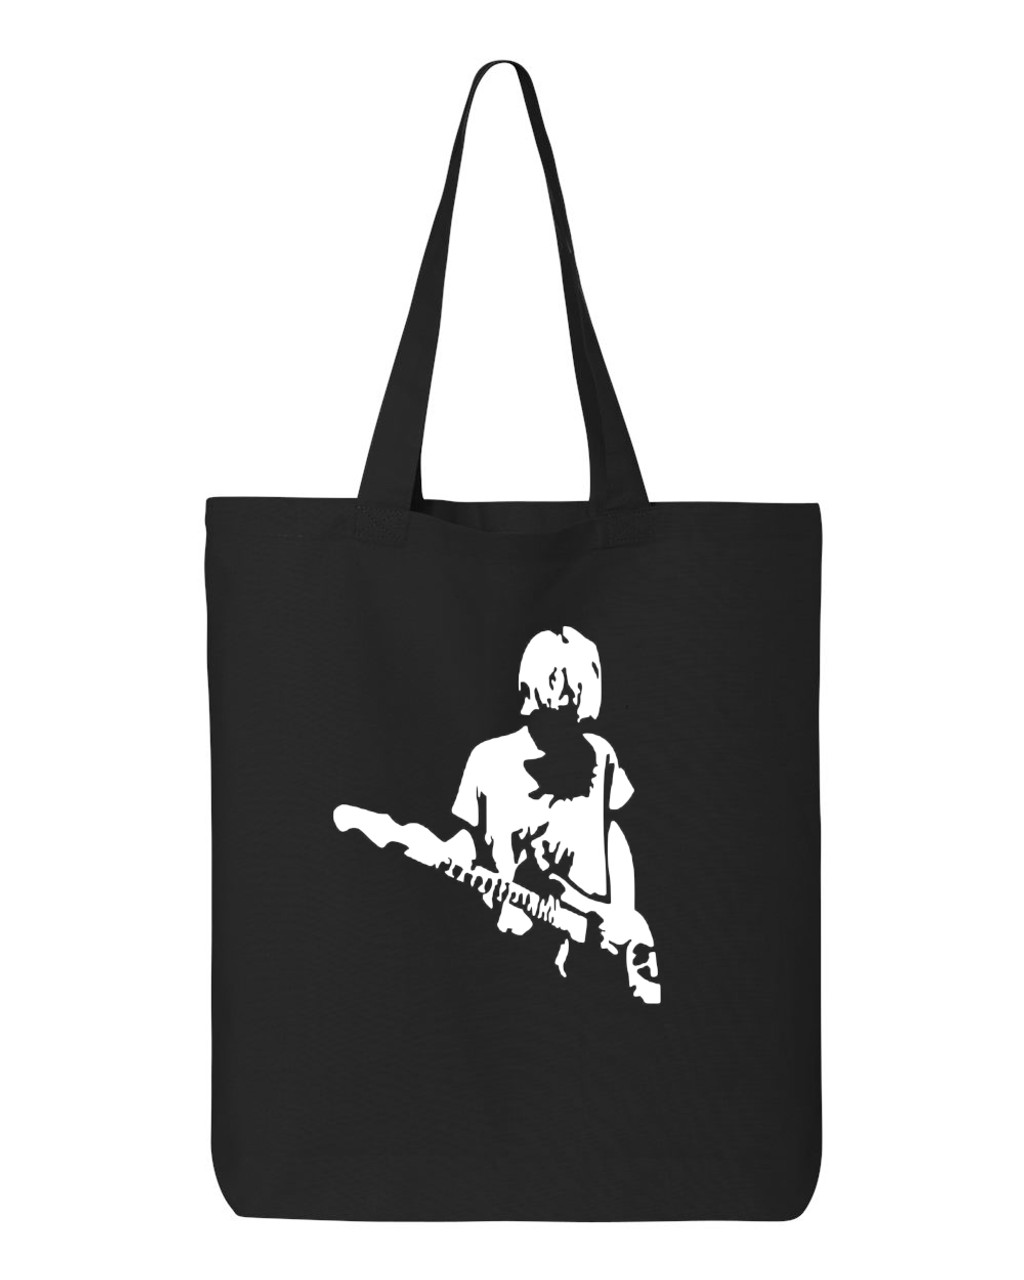 Cobain Grunge Guitar Punk Rock Nirvana Cotton Canvas Reusable Shopping Bag 27L Large Black Tote